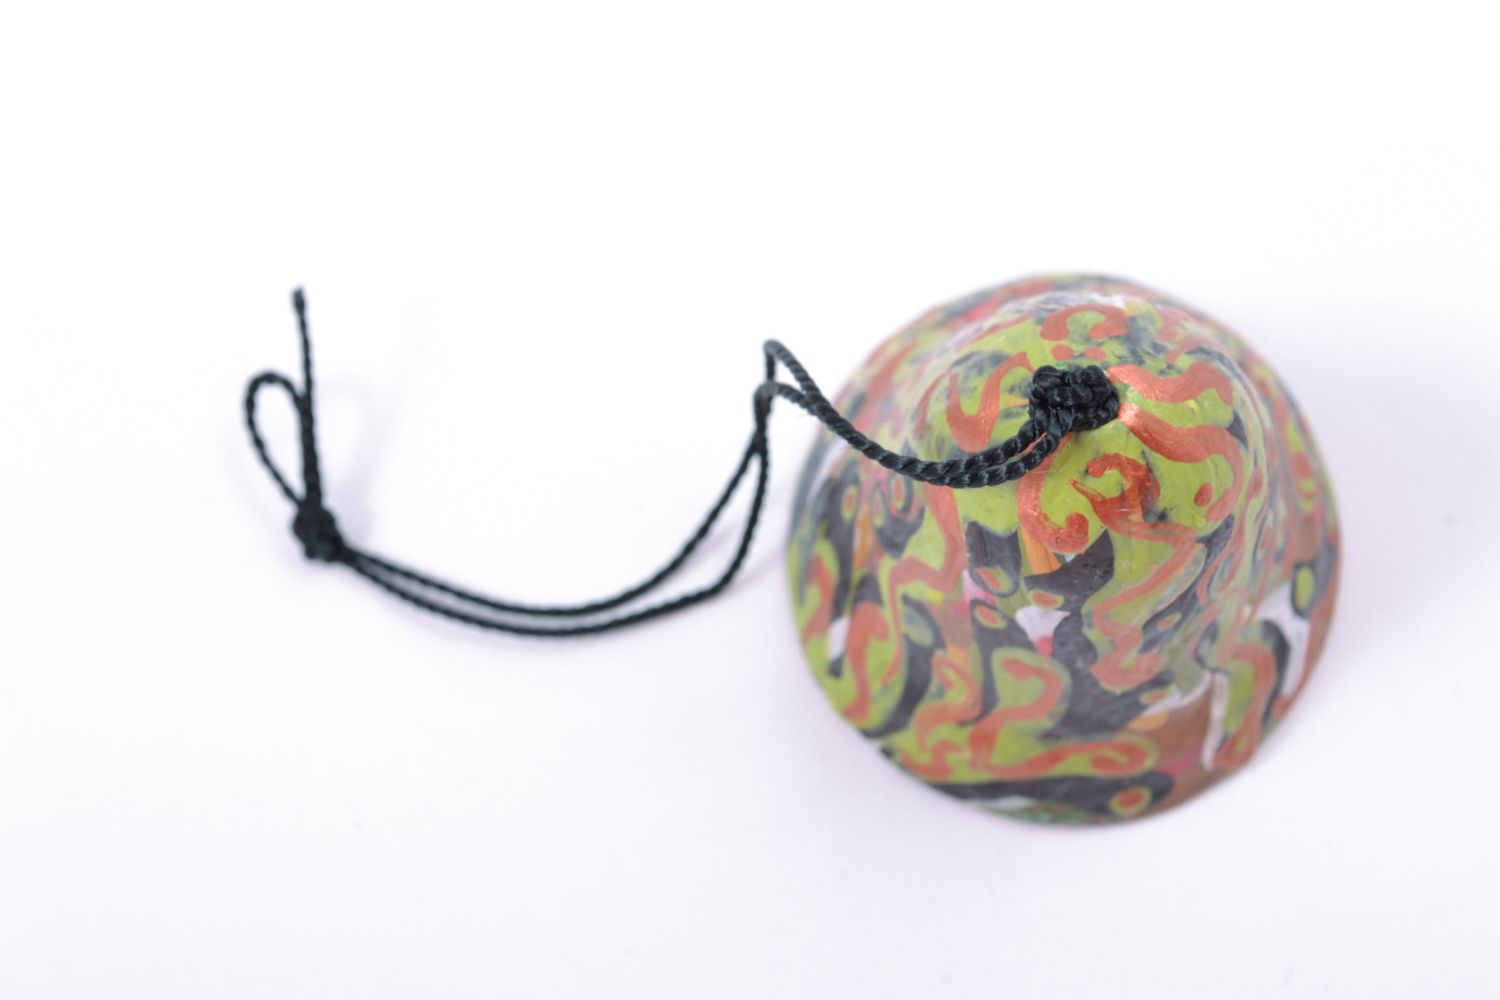 Petite cloche terre cuite multicolore peinte de colorants acryliques faite main photo 4